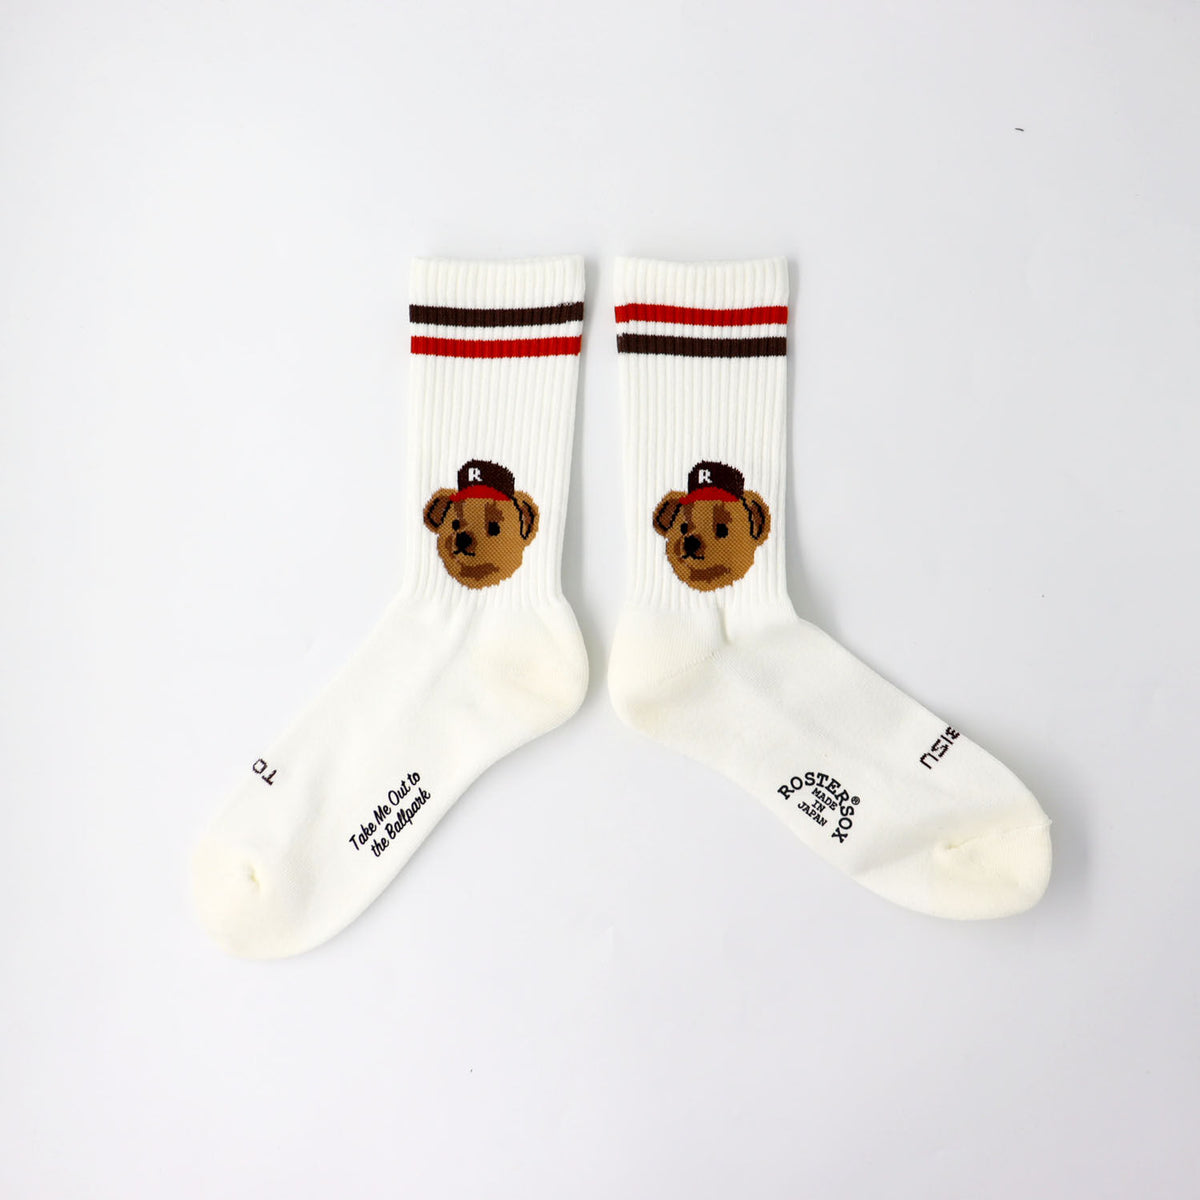 Rostersox Japan TEAM BEAR Socks - MEDIUM - BROWN